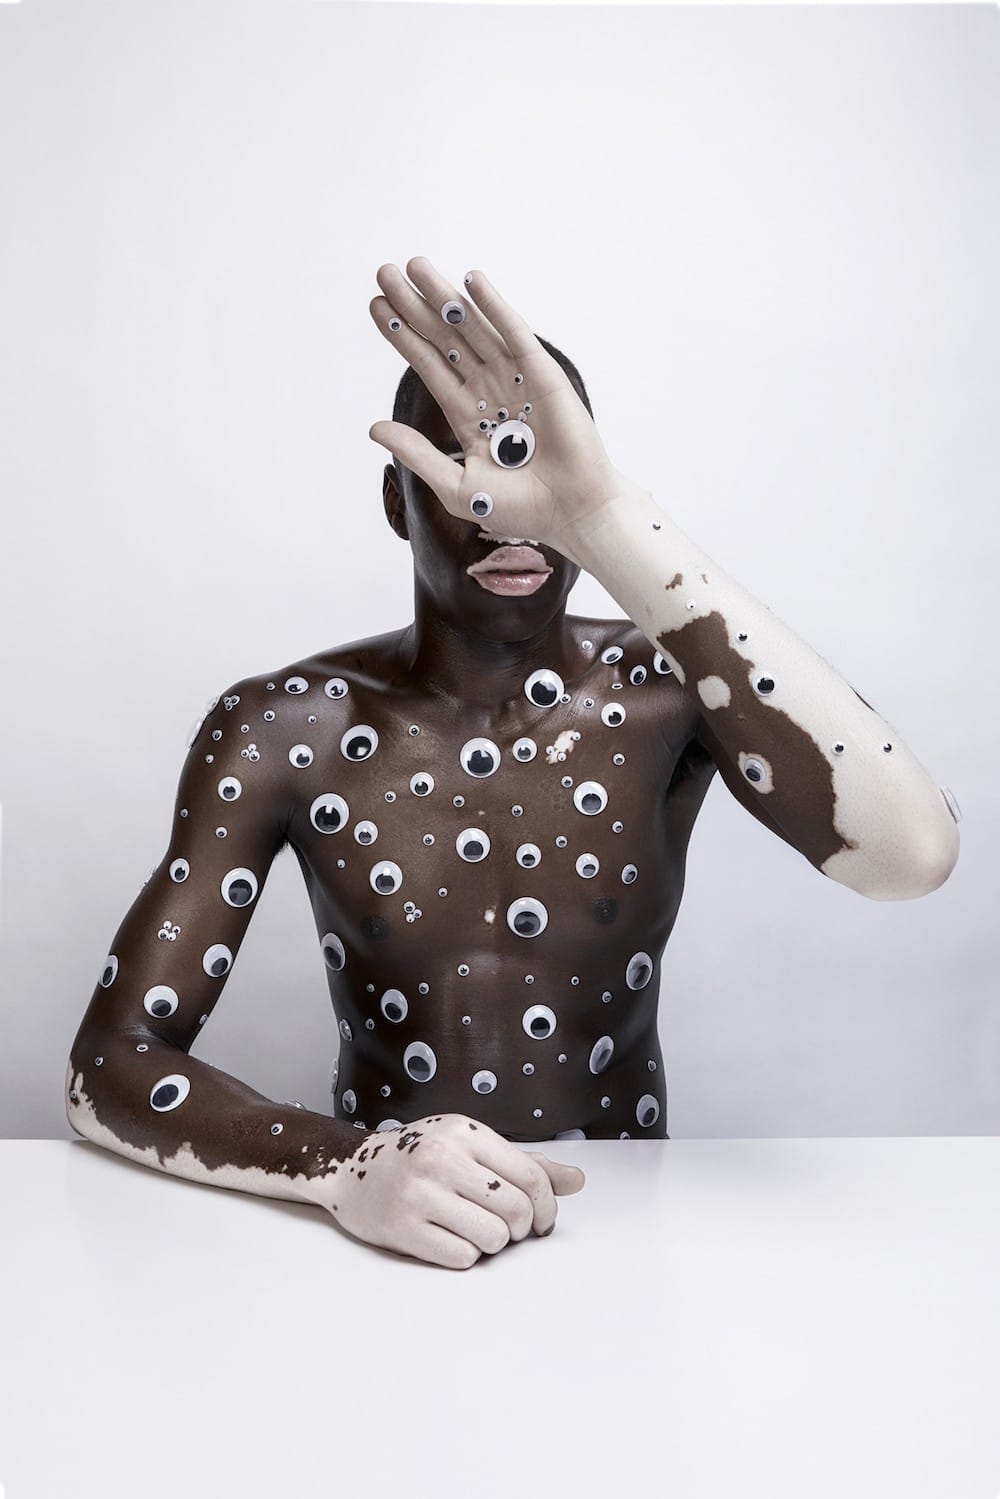 le photographe Justin Dingwall capture le vitiligo